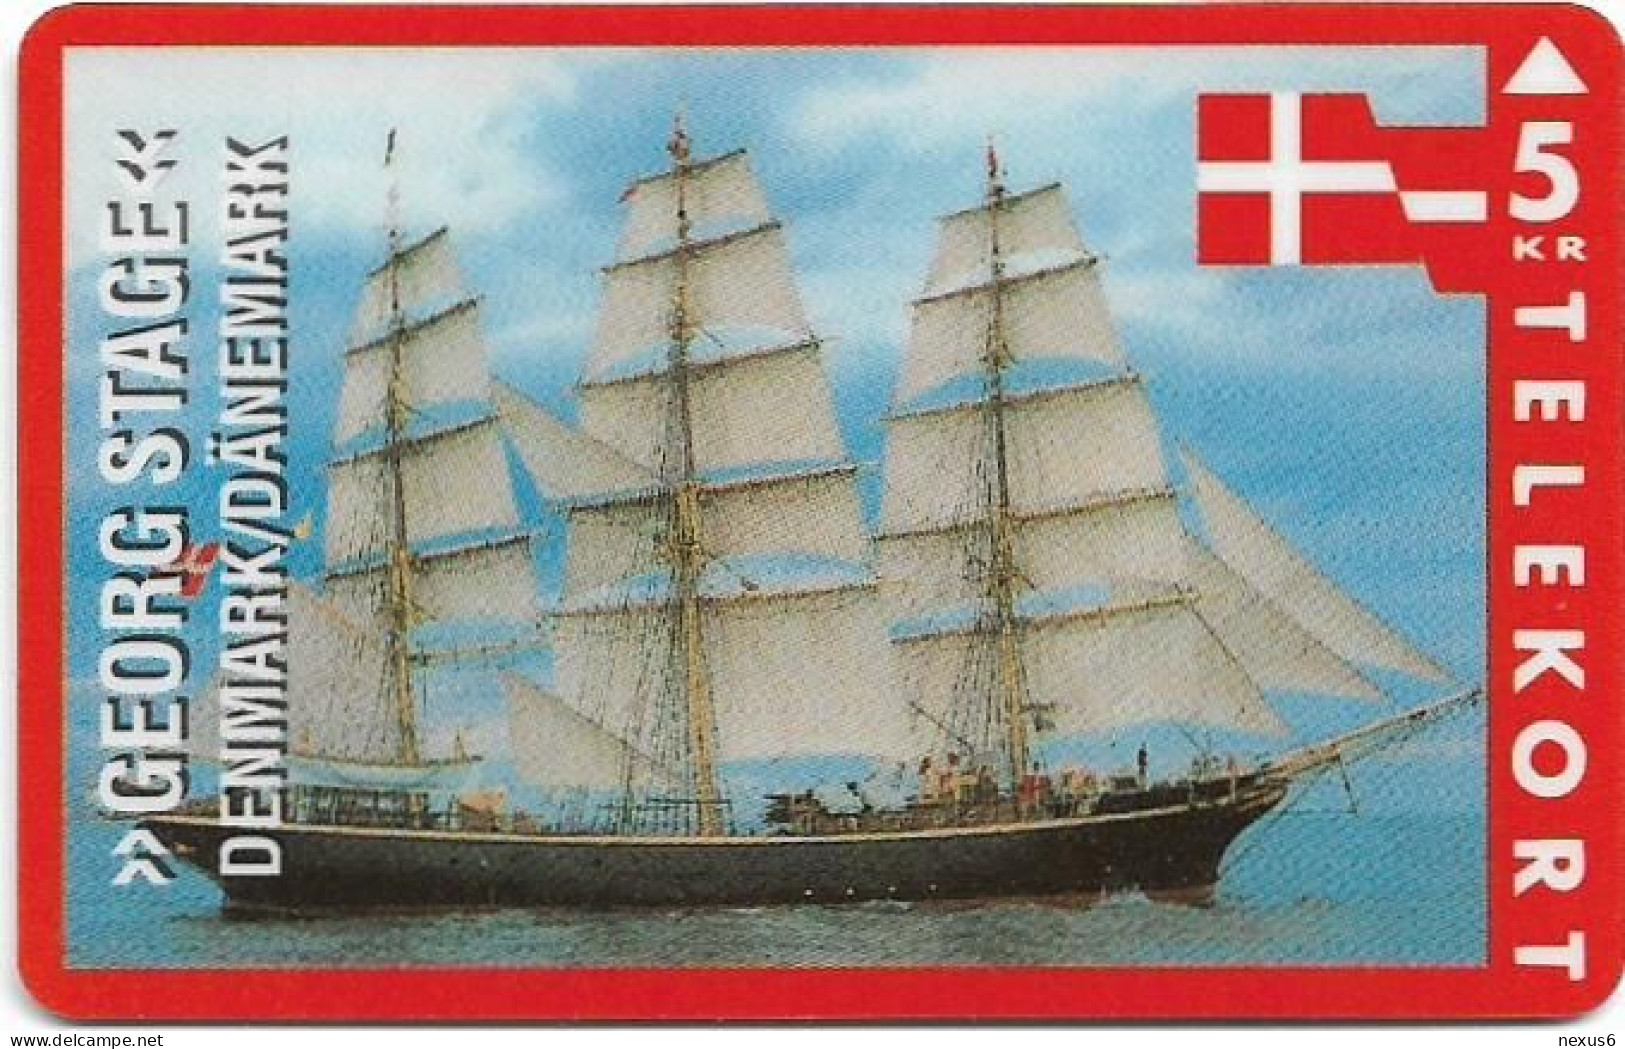 Denmark - KTAS - Ships (Red) - Denmark - Georg Stage - TDKP060 - 01.1994, 5kr, 2.500ex, Used - Dinamarca